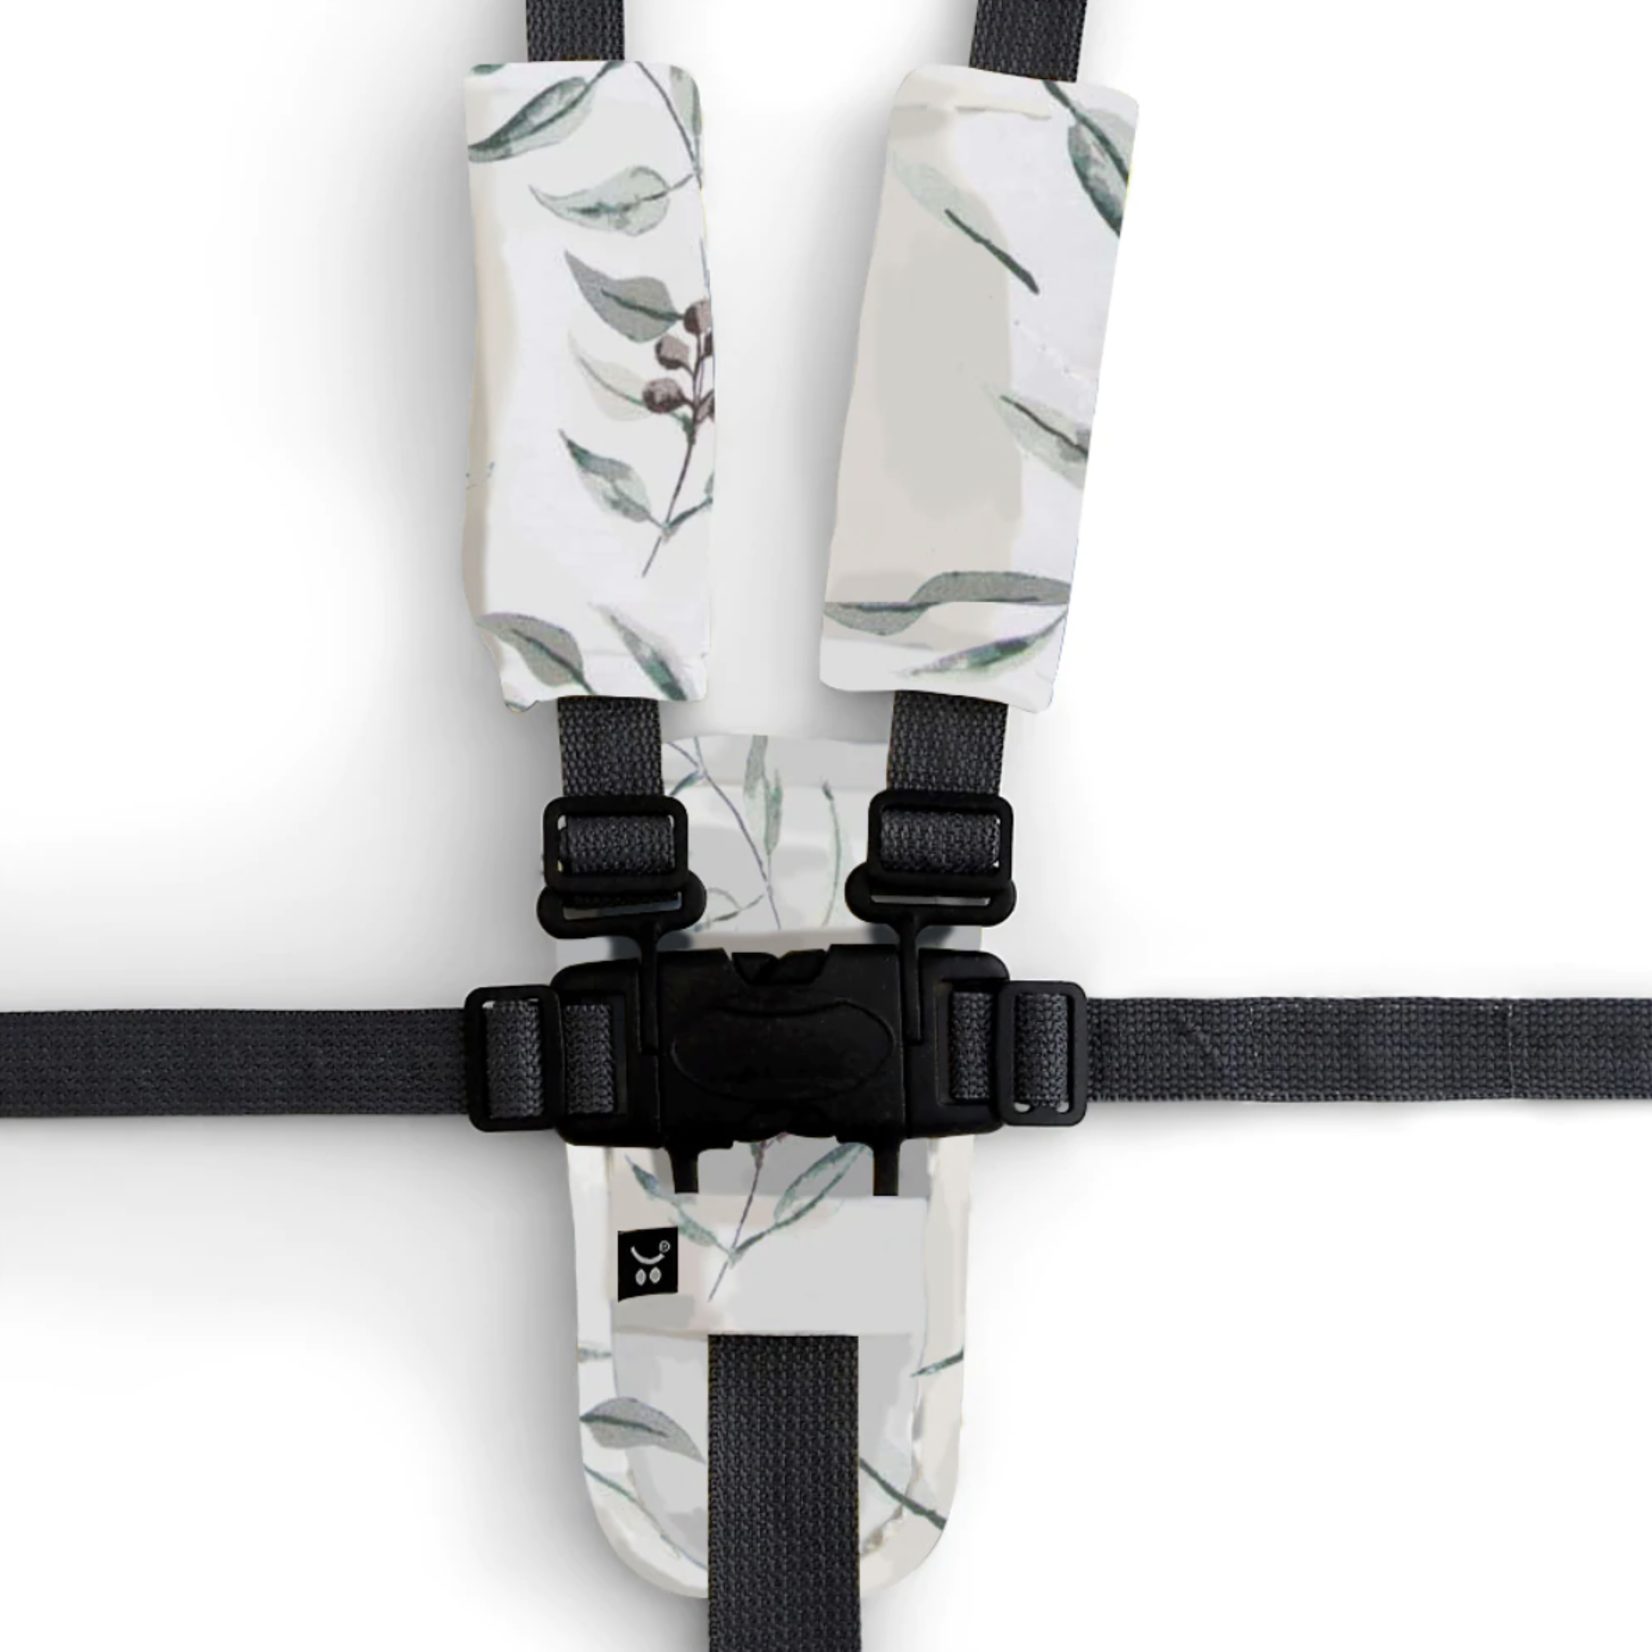 Outlookbaby 3 Piece Harness Cover Set - Australian Eucalypt